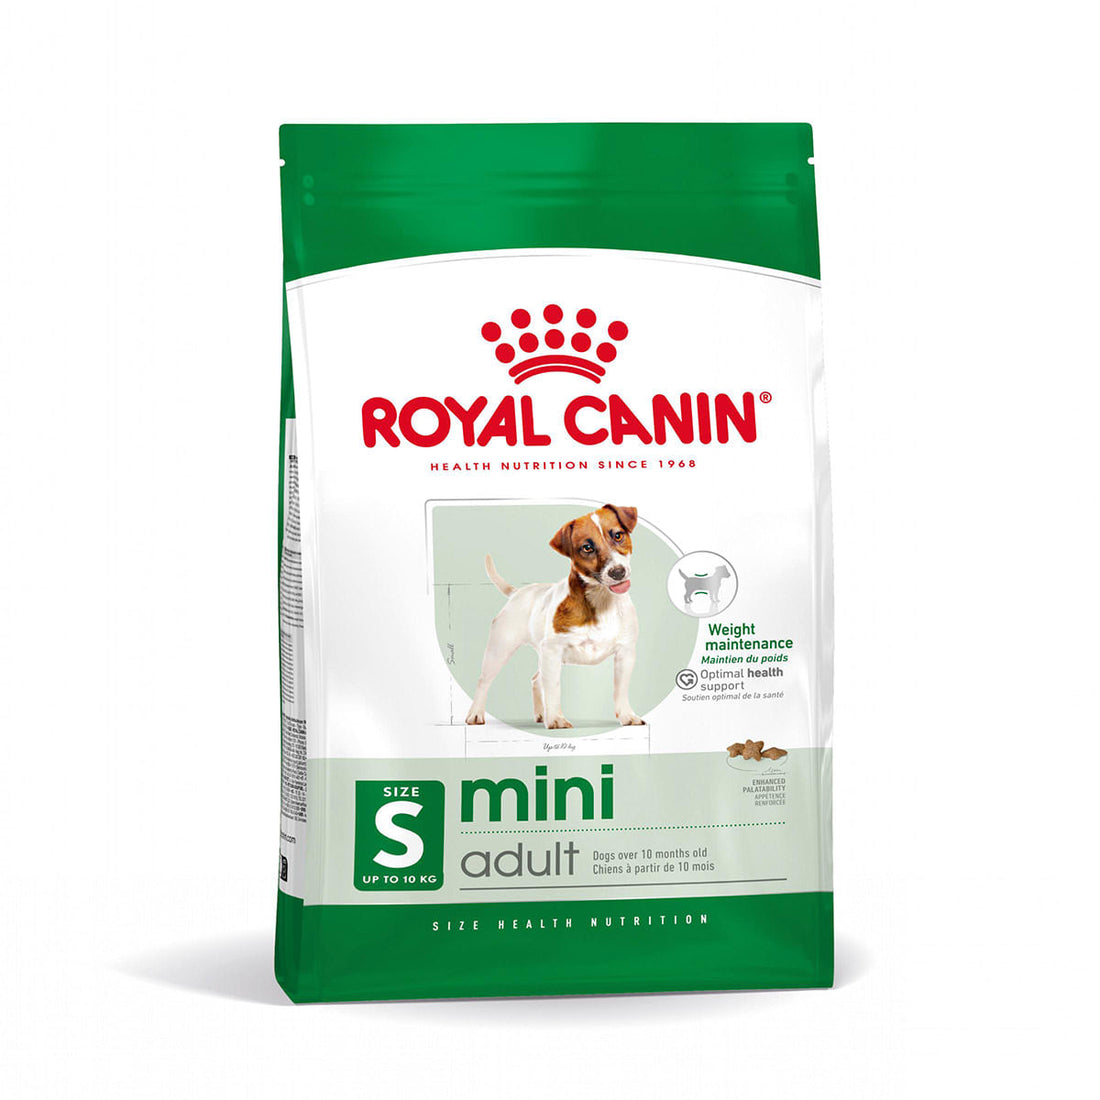 Royal canin Mini Adult 800G